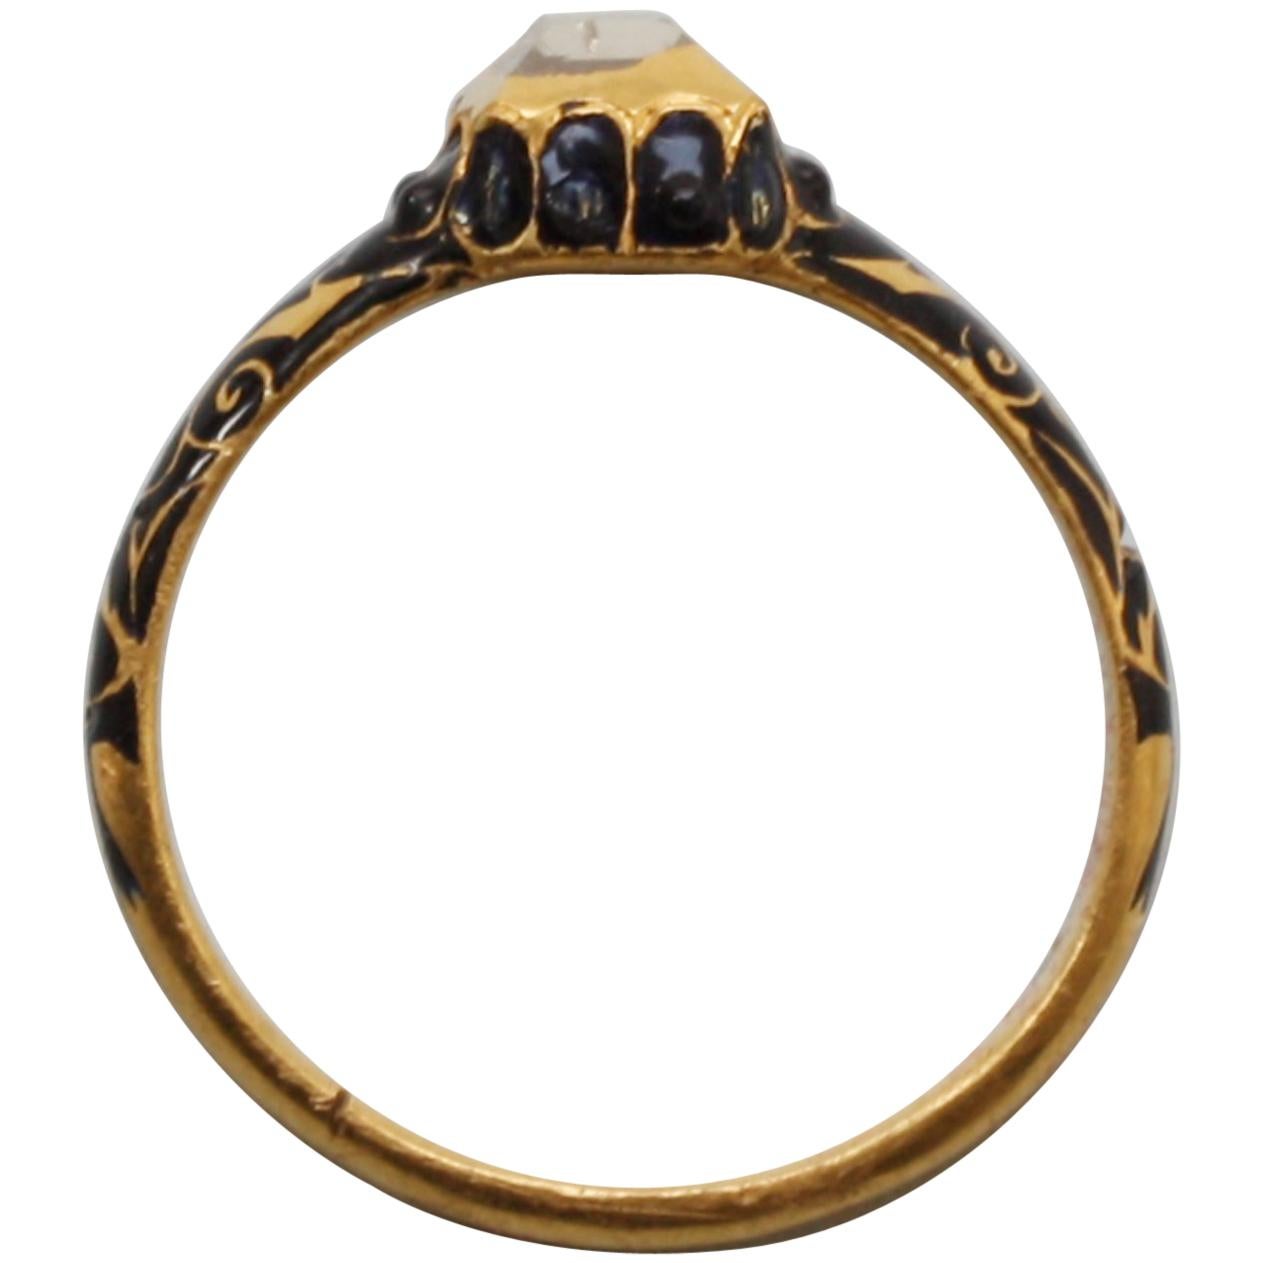 Gold and Diamond Renaissance Ring, circa 1600